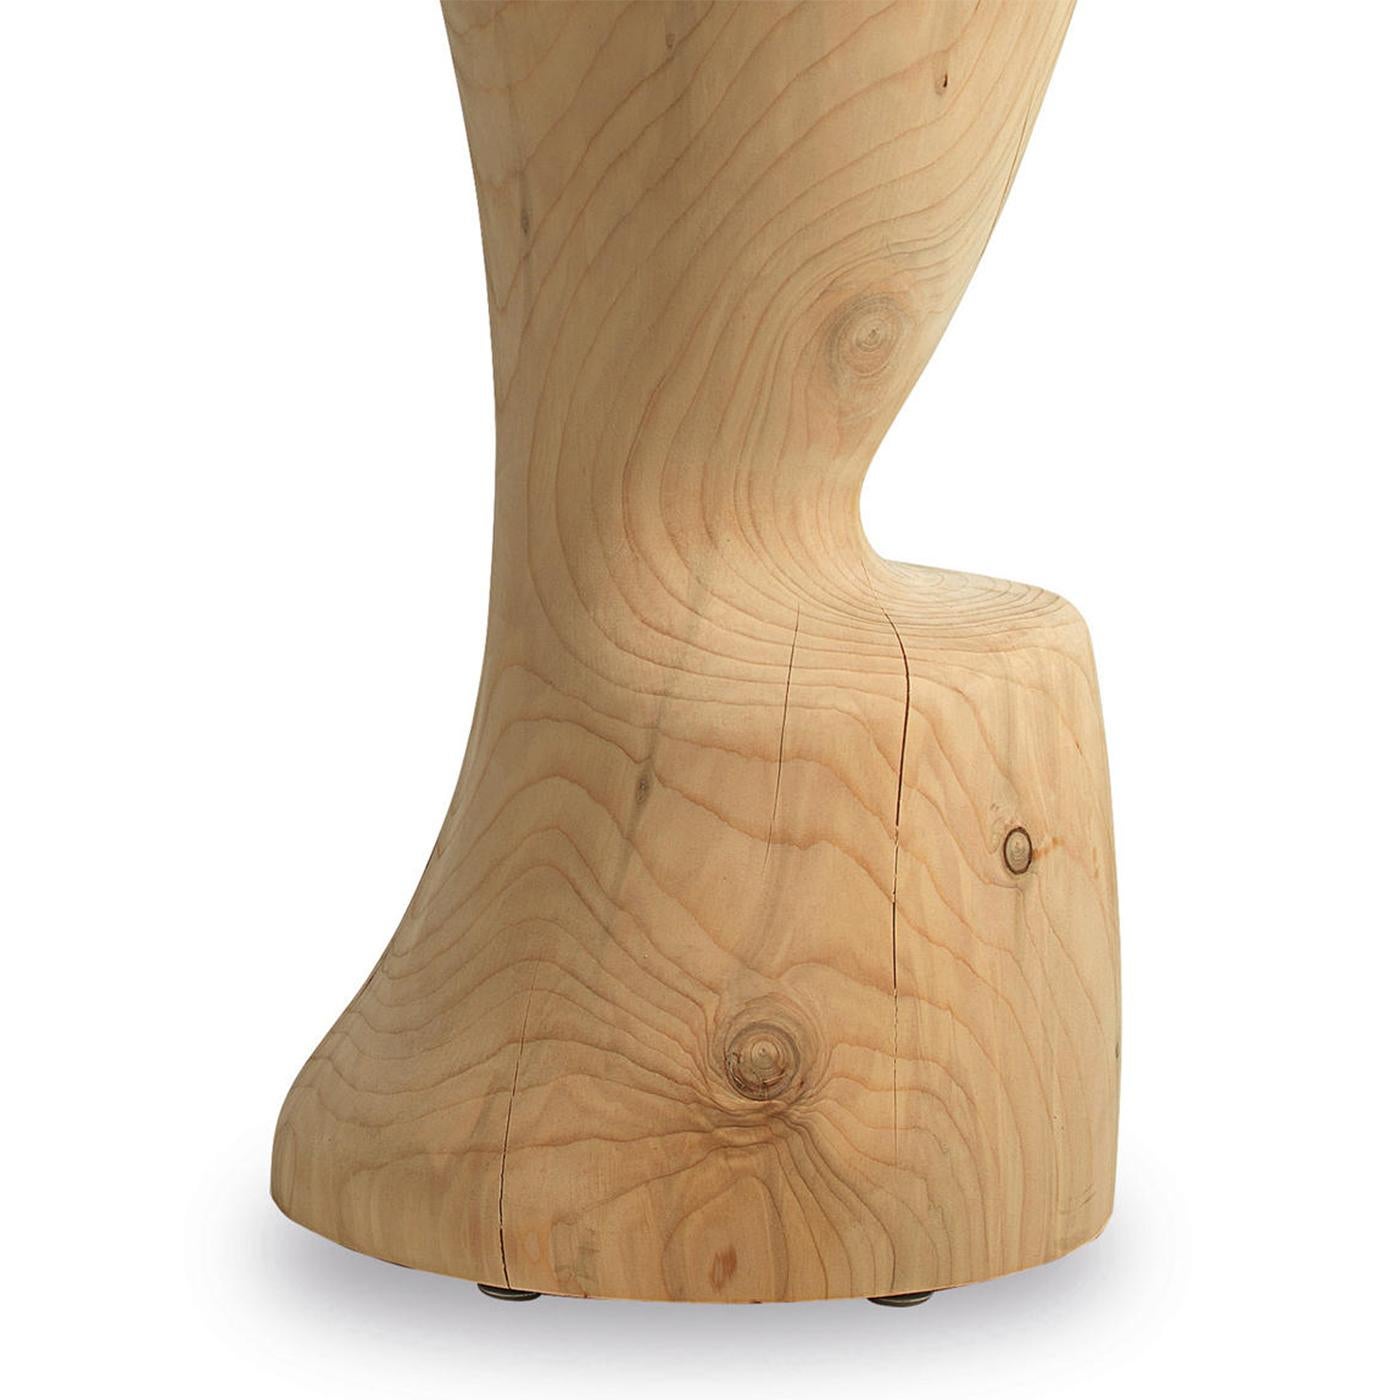 Hand-Crafted Cut Cedar Stool For Sale